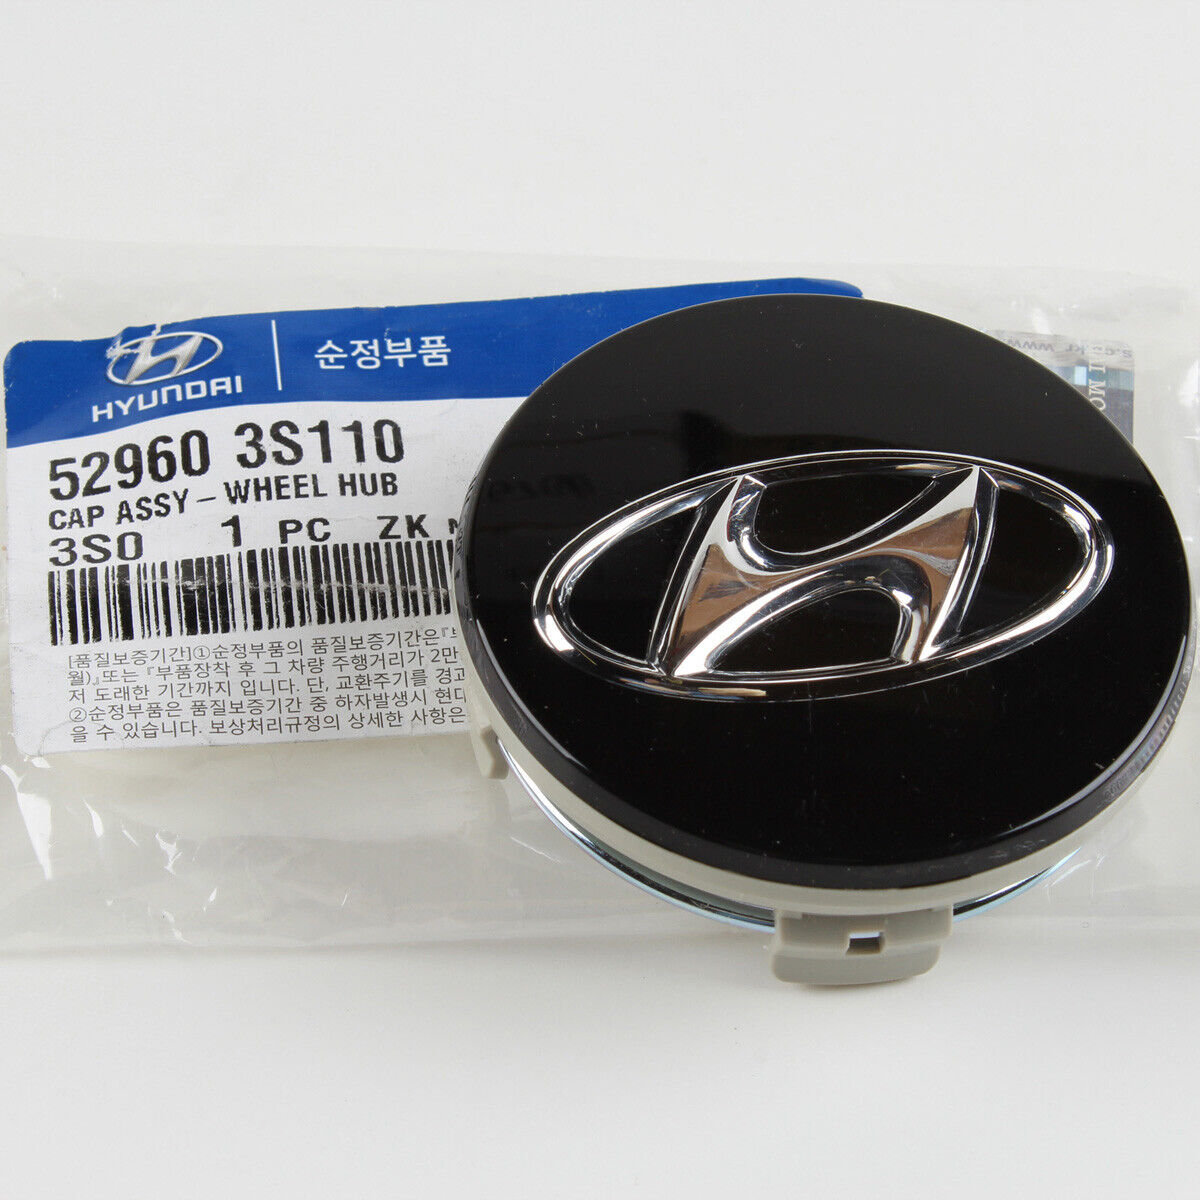 Hyundai Wheel Center Cap Sonata 2010 2011 2012 2013 (1PC) 52960 3S110